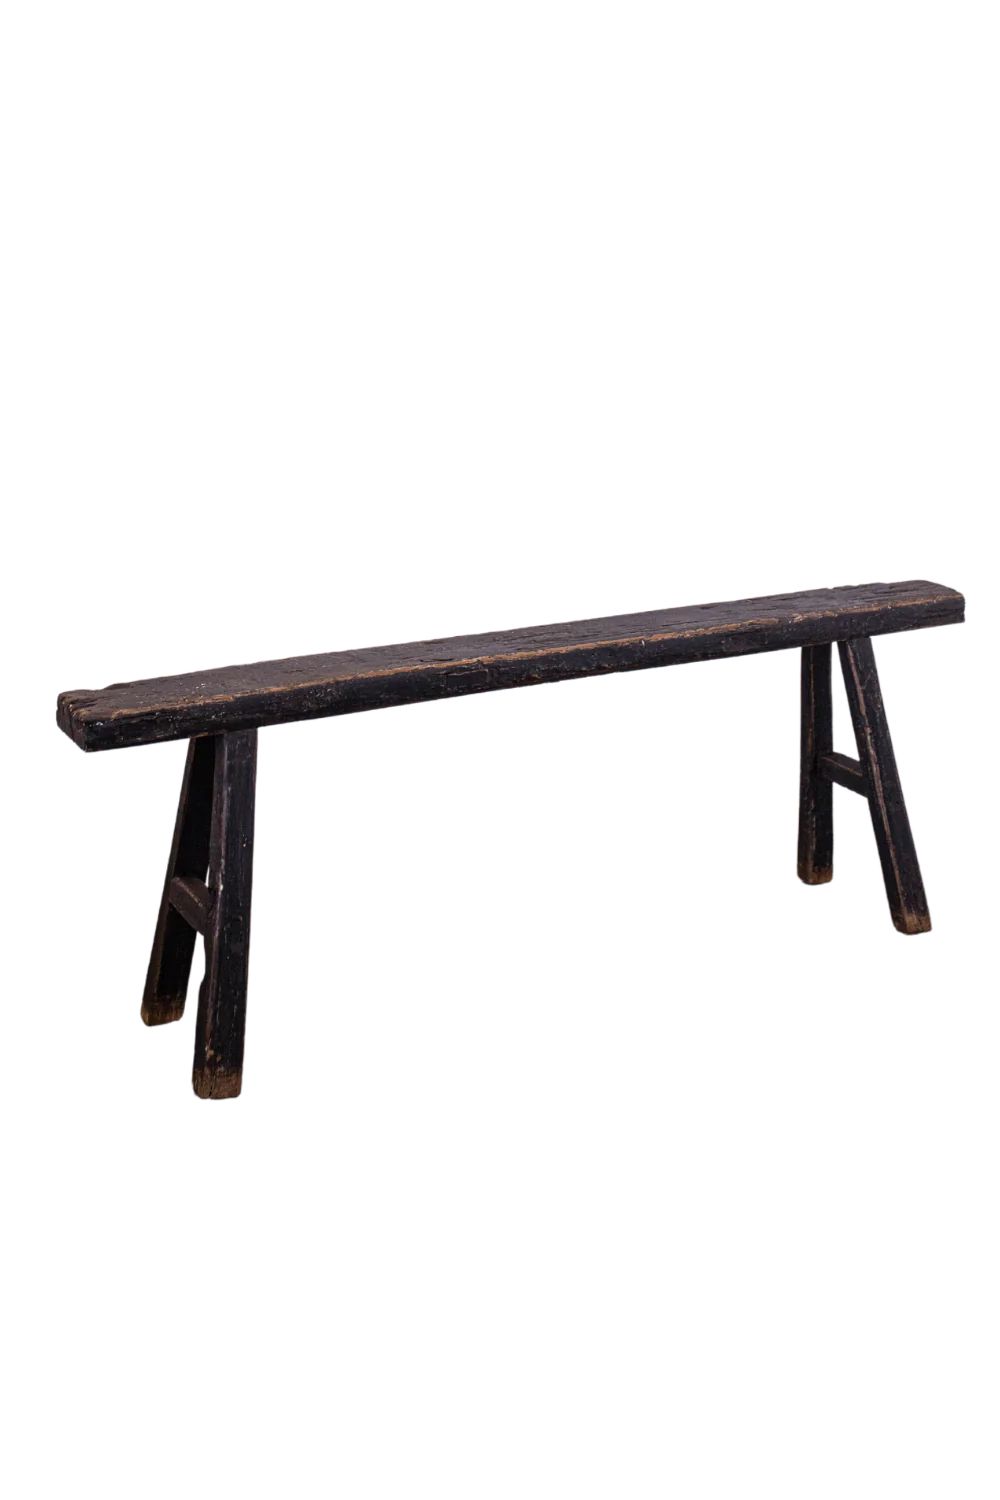 Skinny Black Elm Wood Bench | Luxe B Co